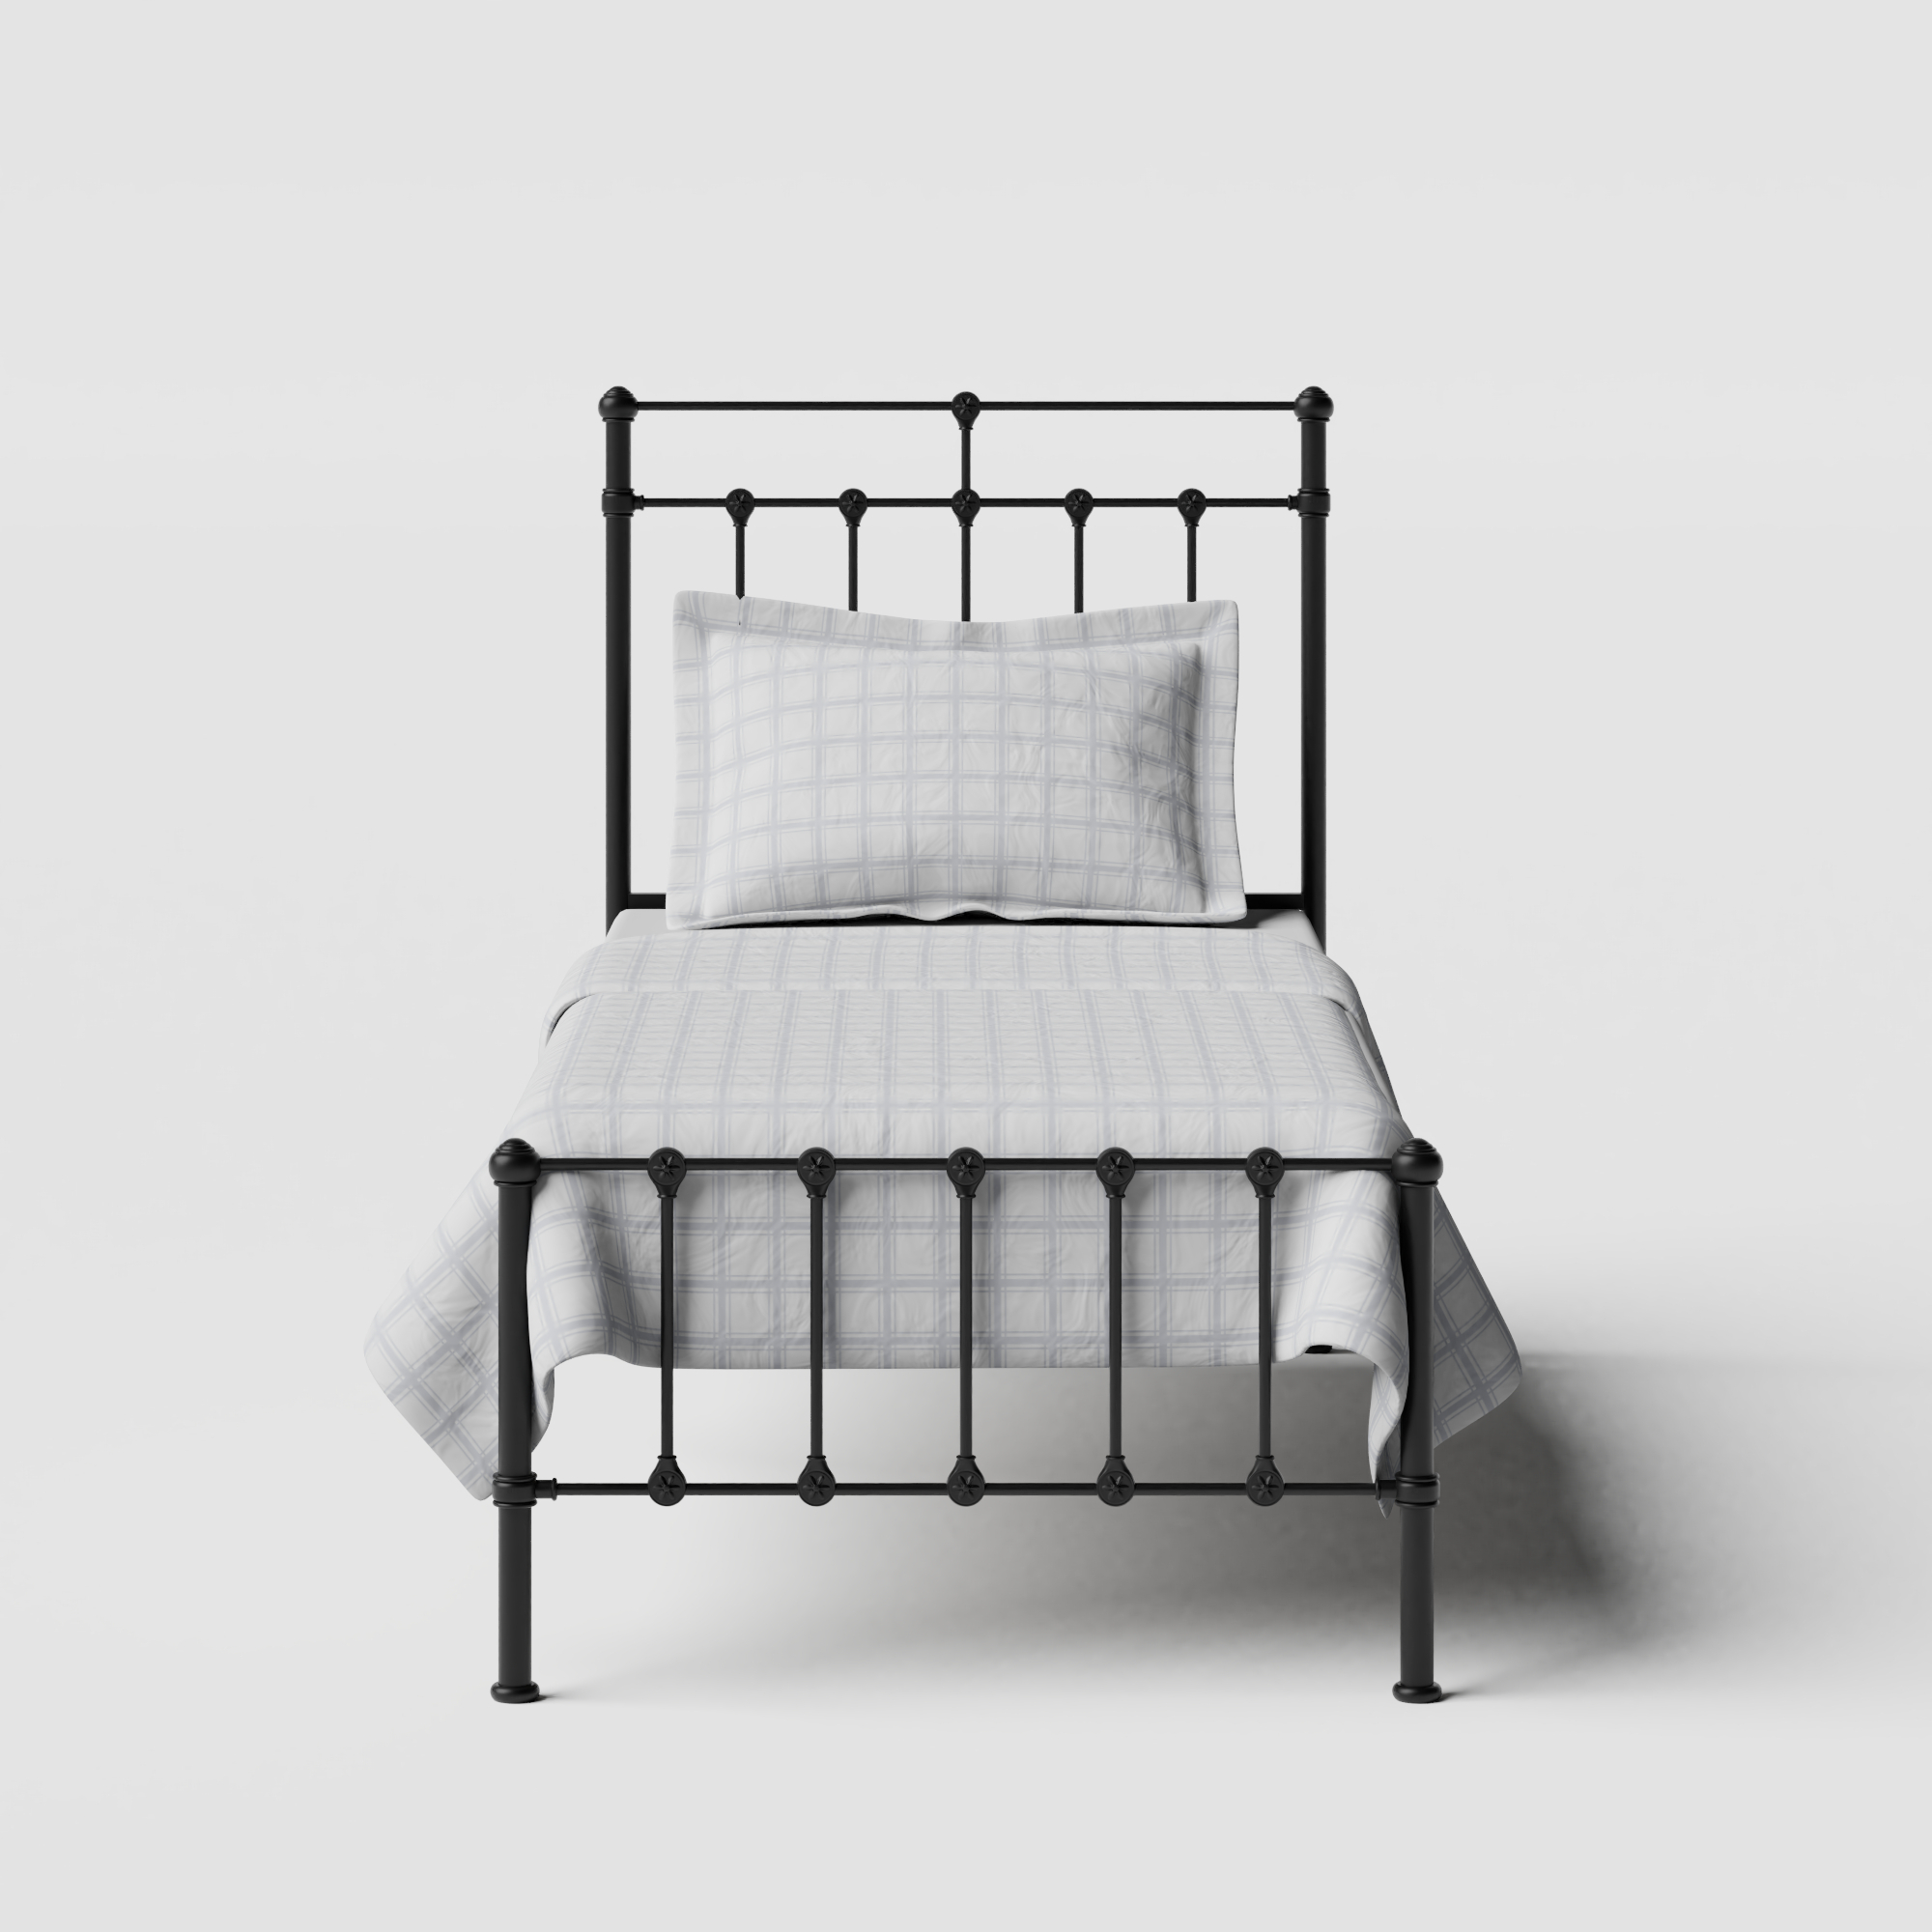 Ashley iron/metal single bed in black